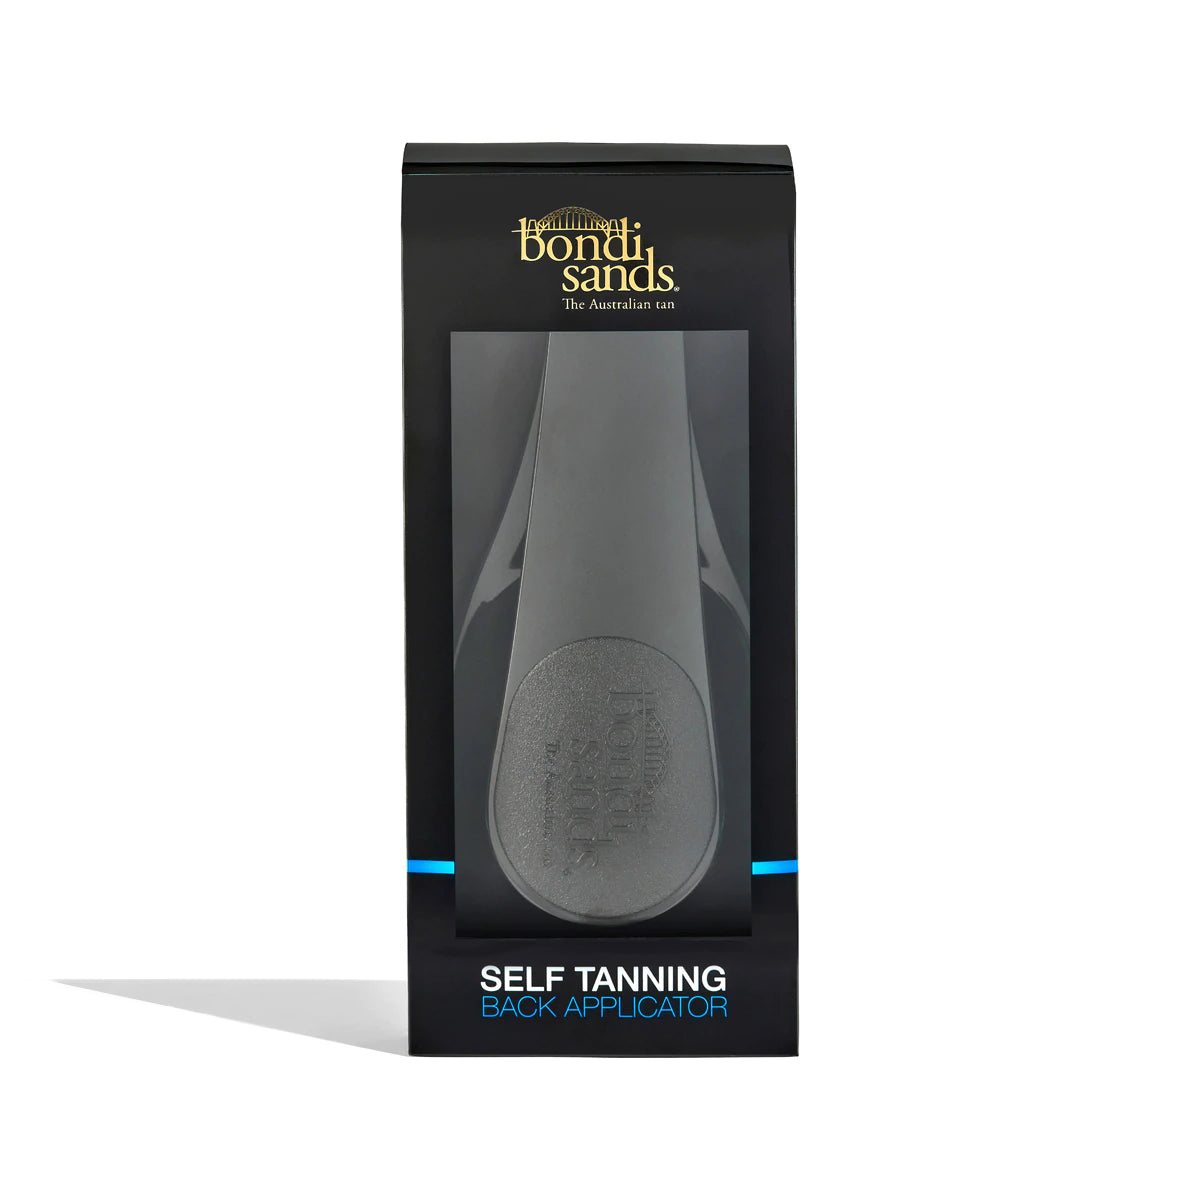 Bondi Sands Tanning Back Applicator packaging